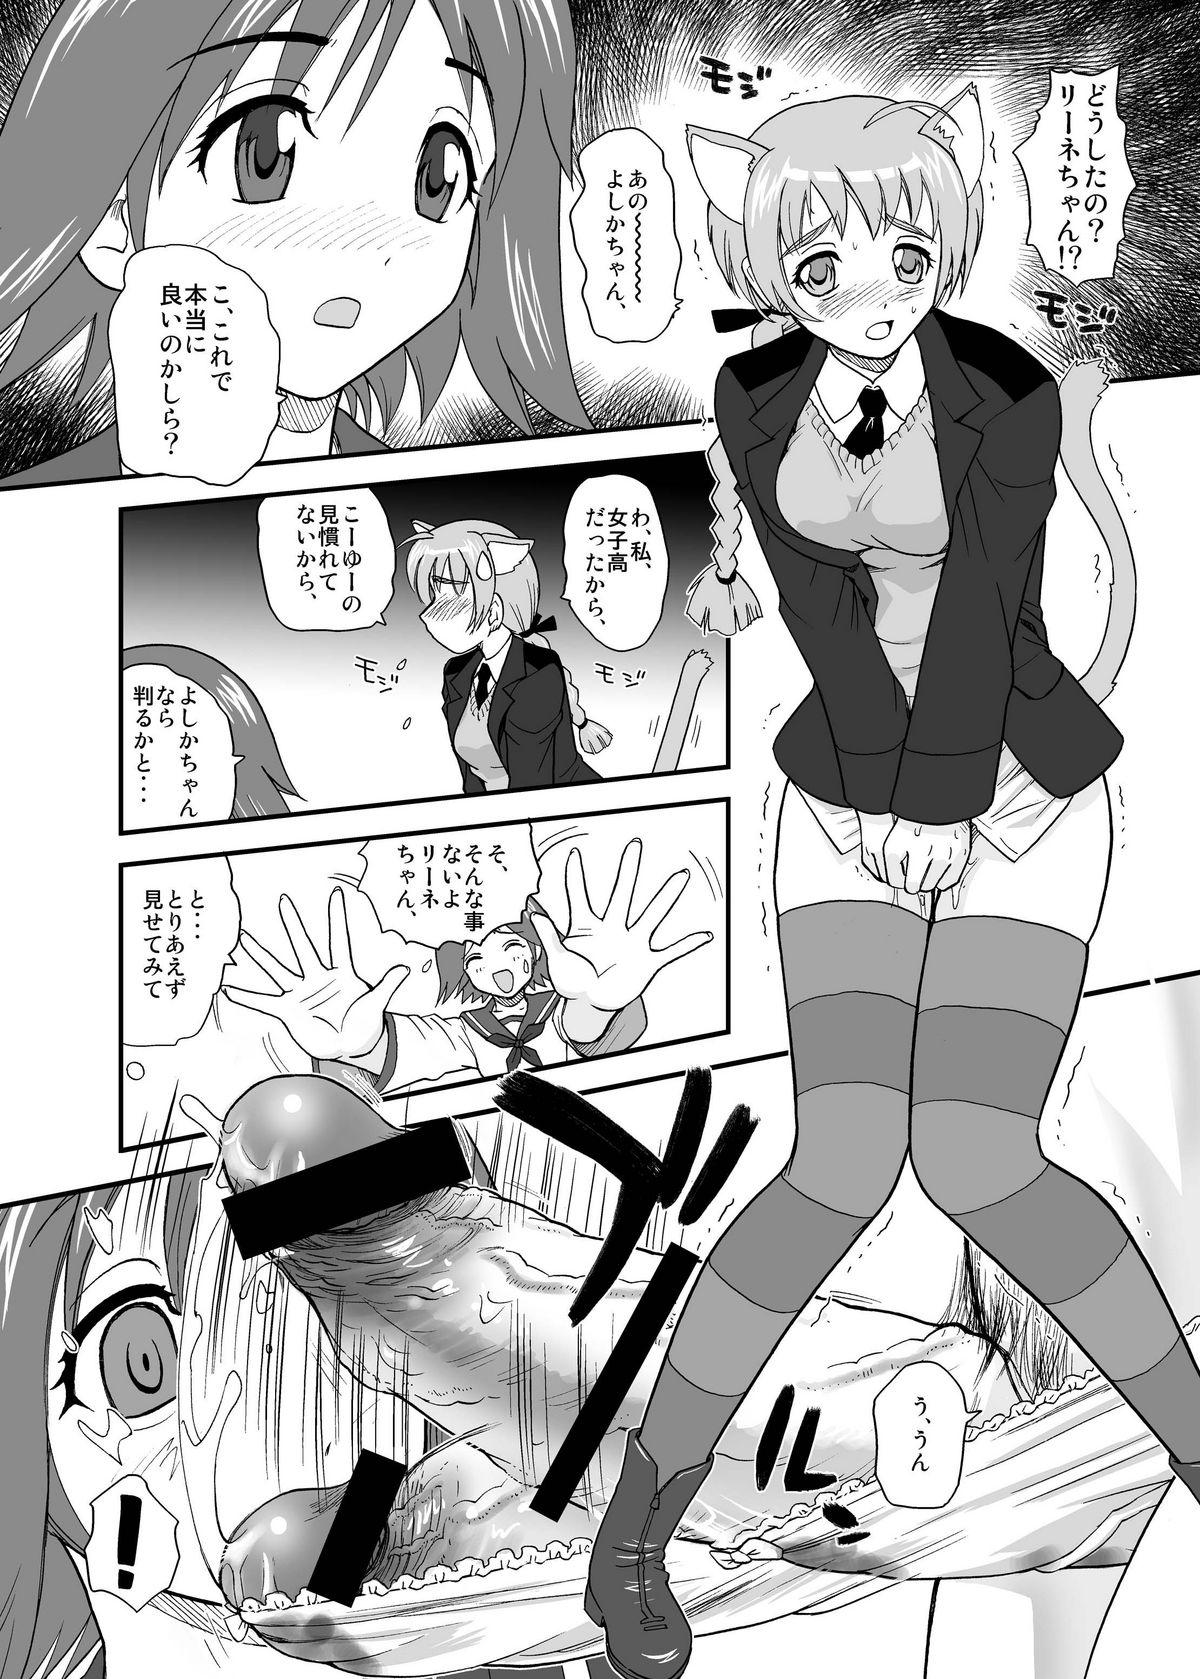 Brasil Chin ★ ja Naikara Hazukashiku Naimon!!! - Strike witches Sologirl - Page 8